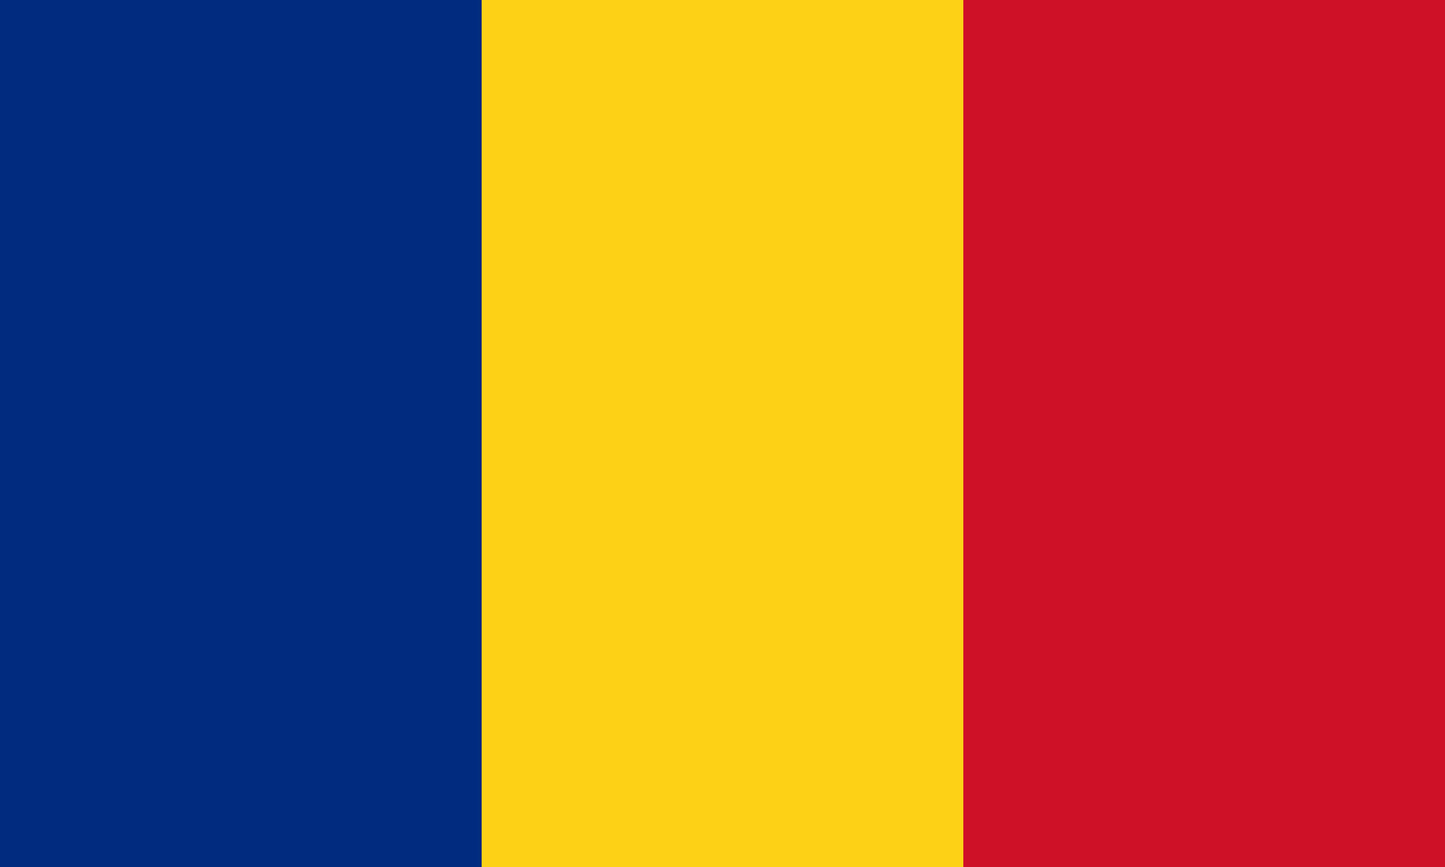 UF-ROM-150x90 - государственный флаг Румынии